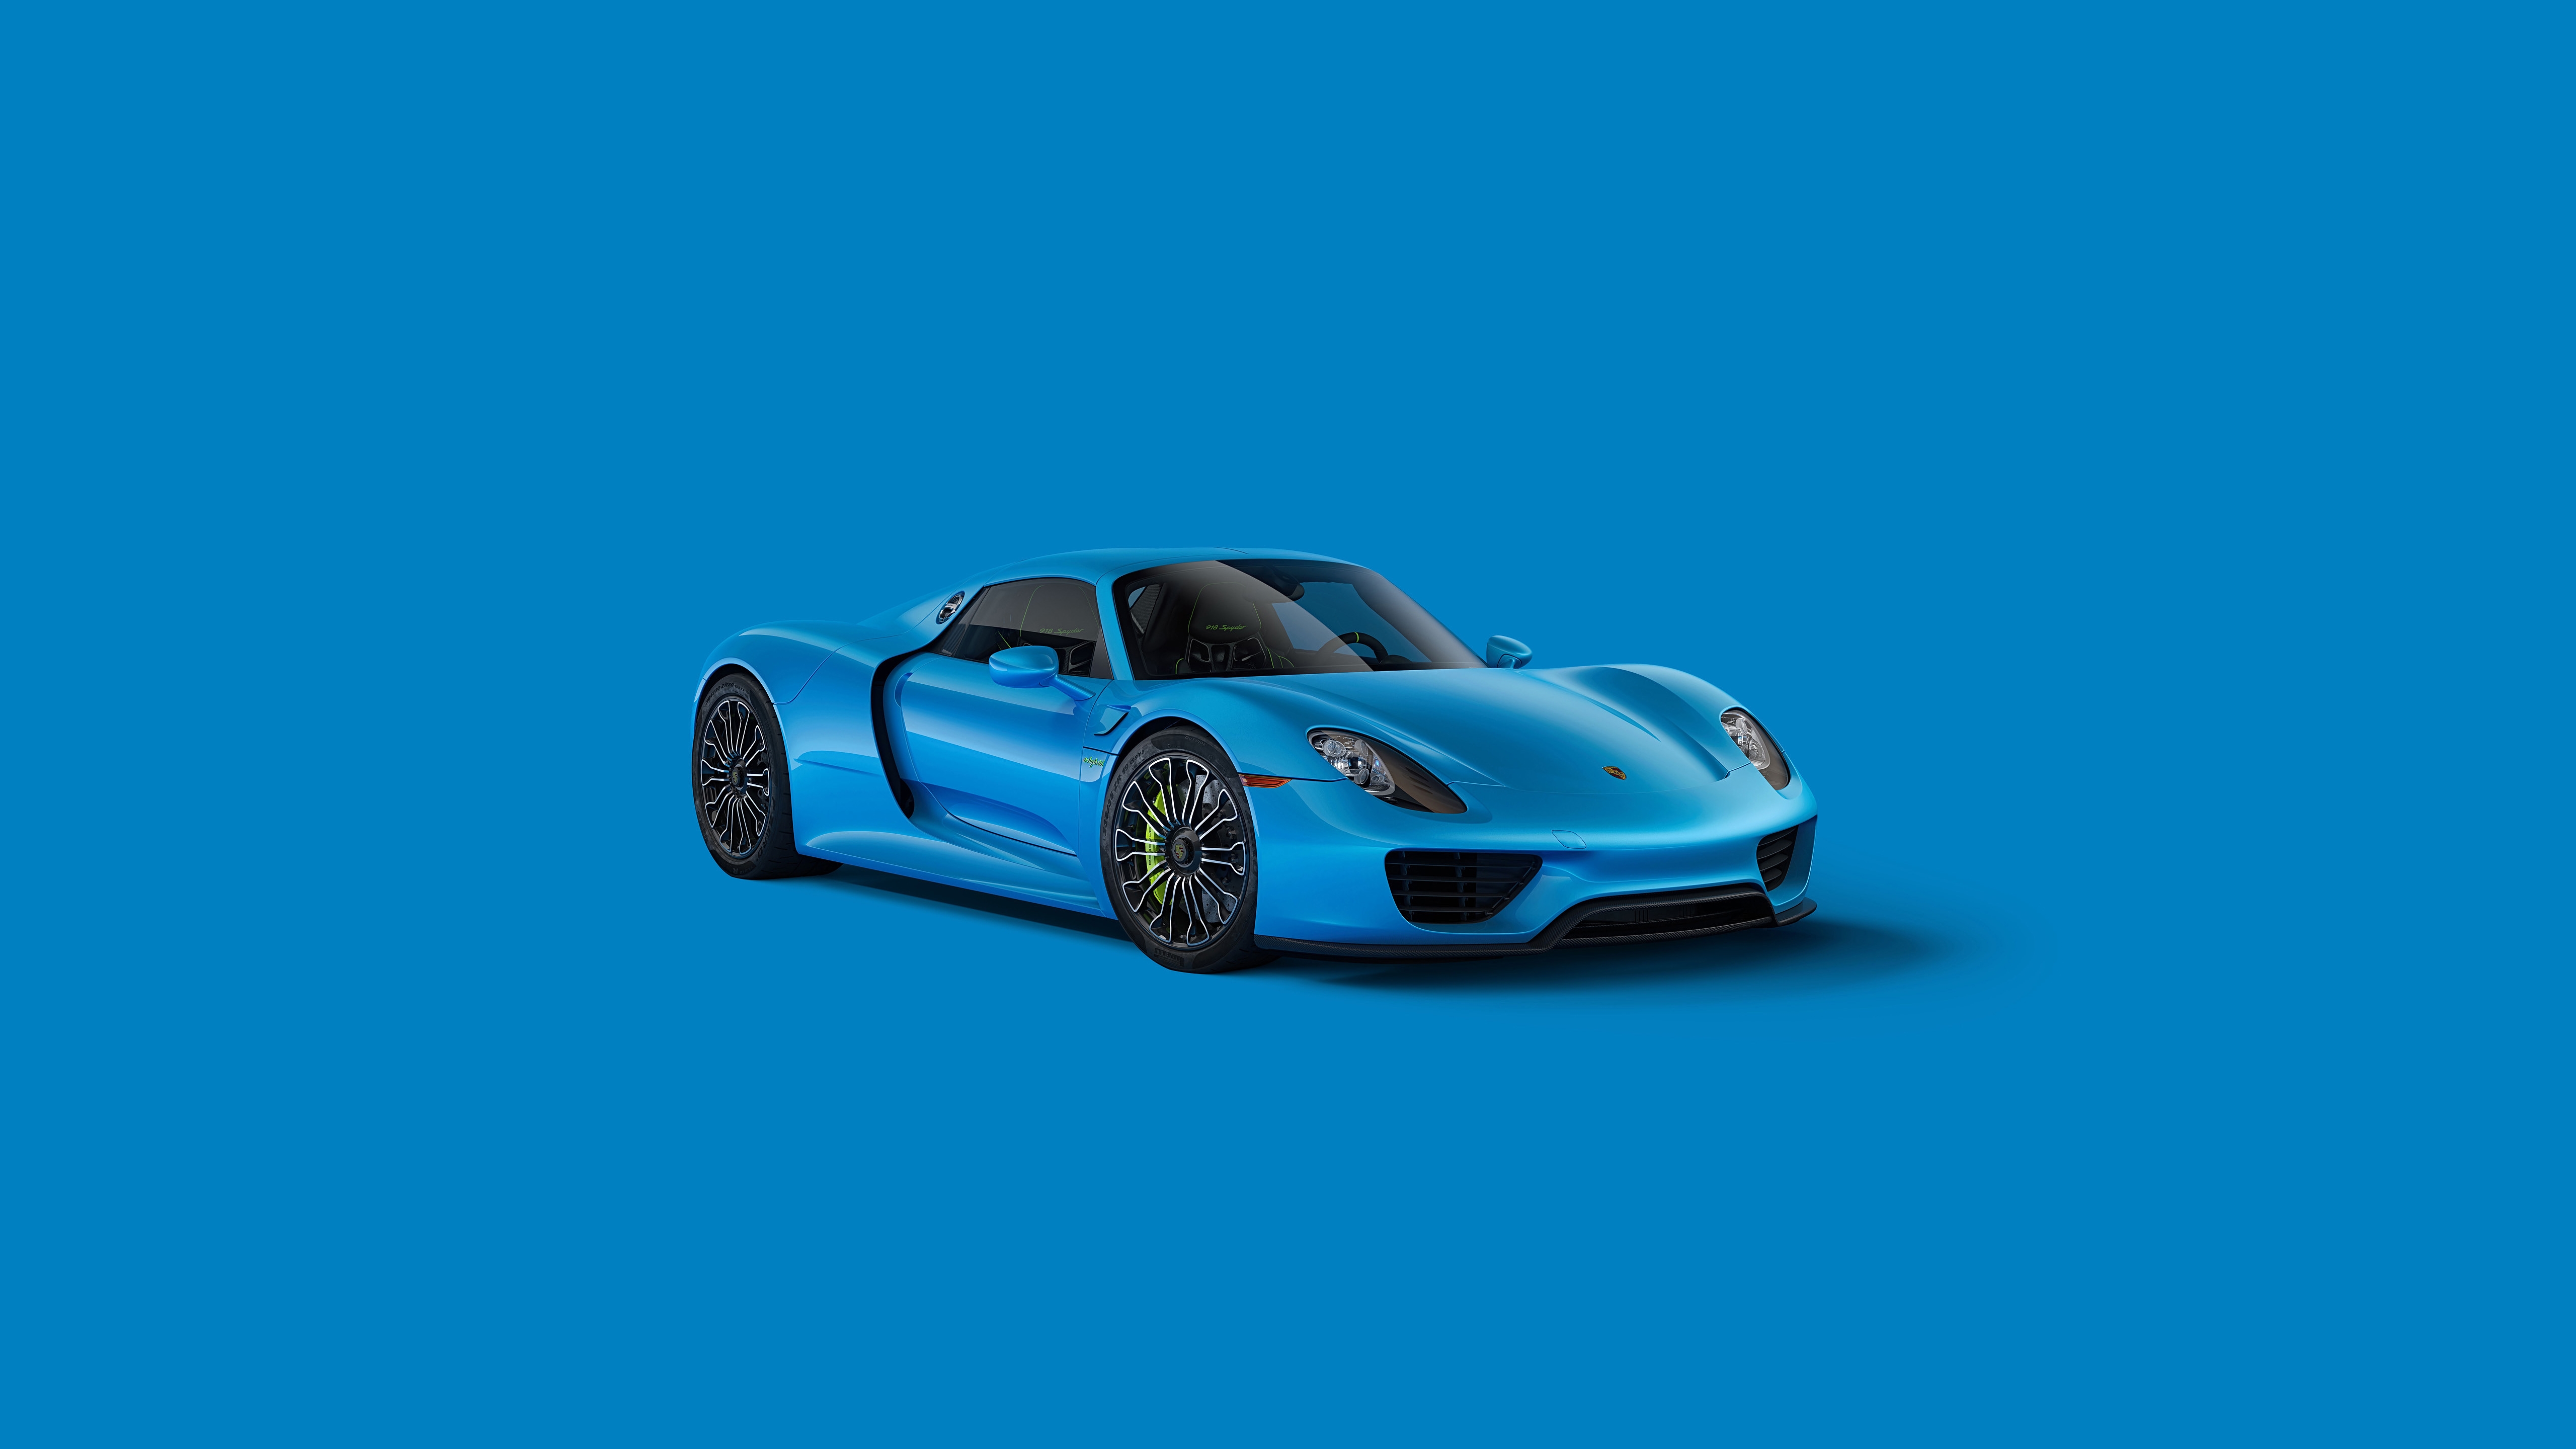 HD wallpaper, Porsche 918 Spyder, 5K, Blue Aesthetic, Blue Background, Cgi